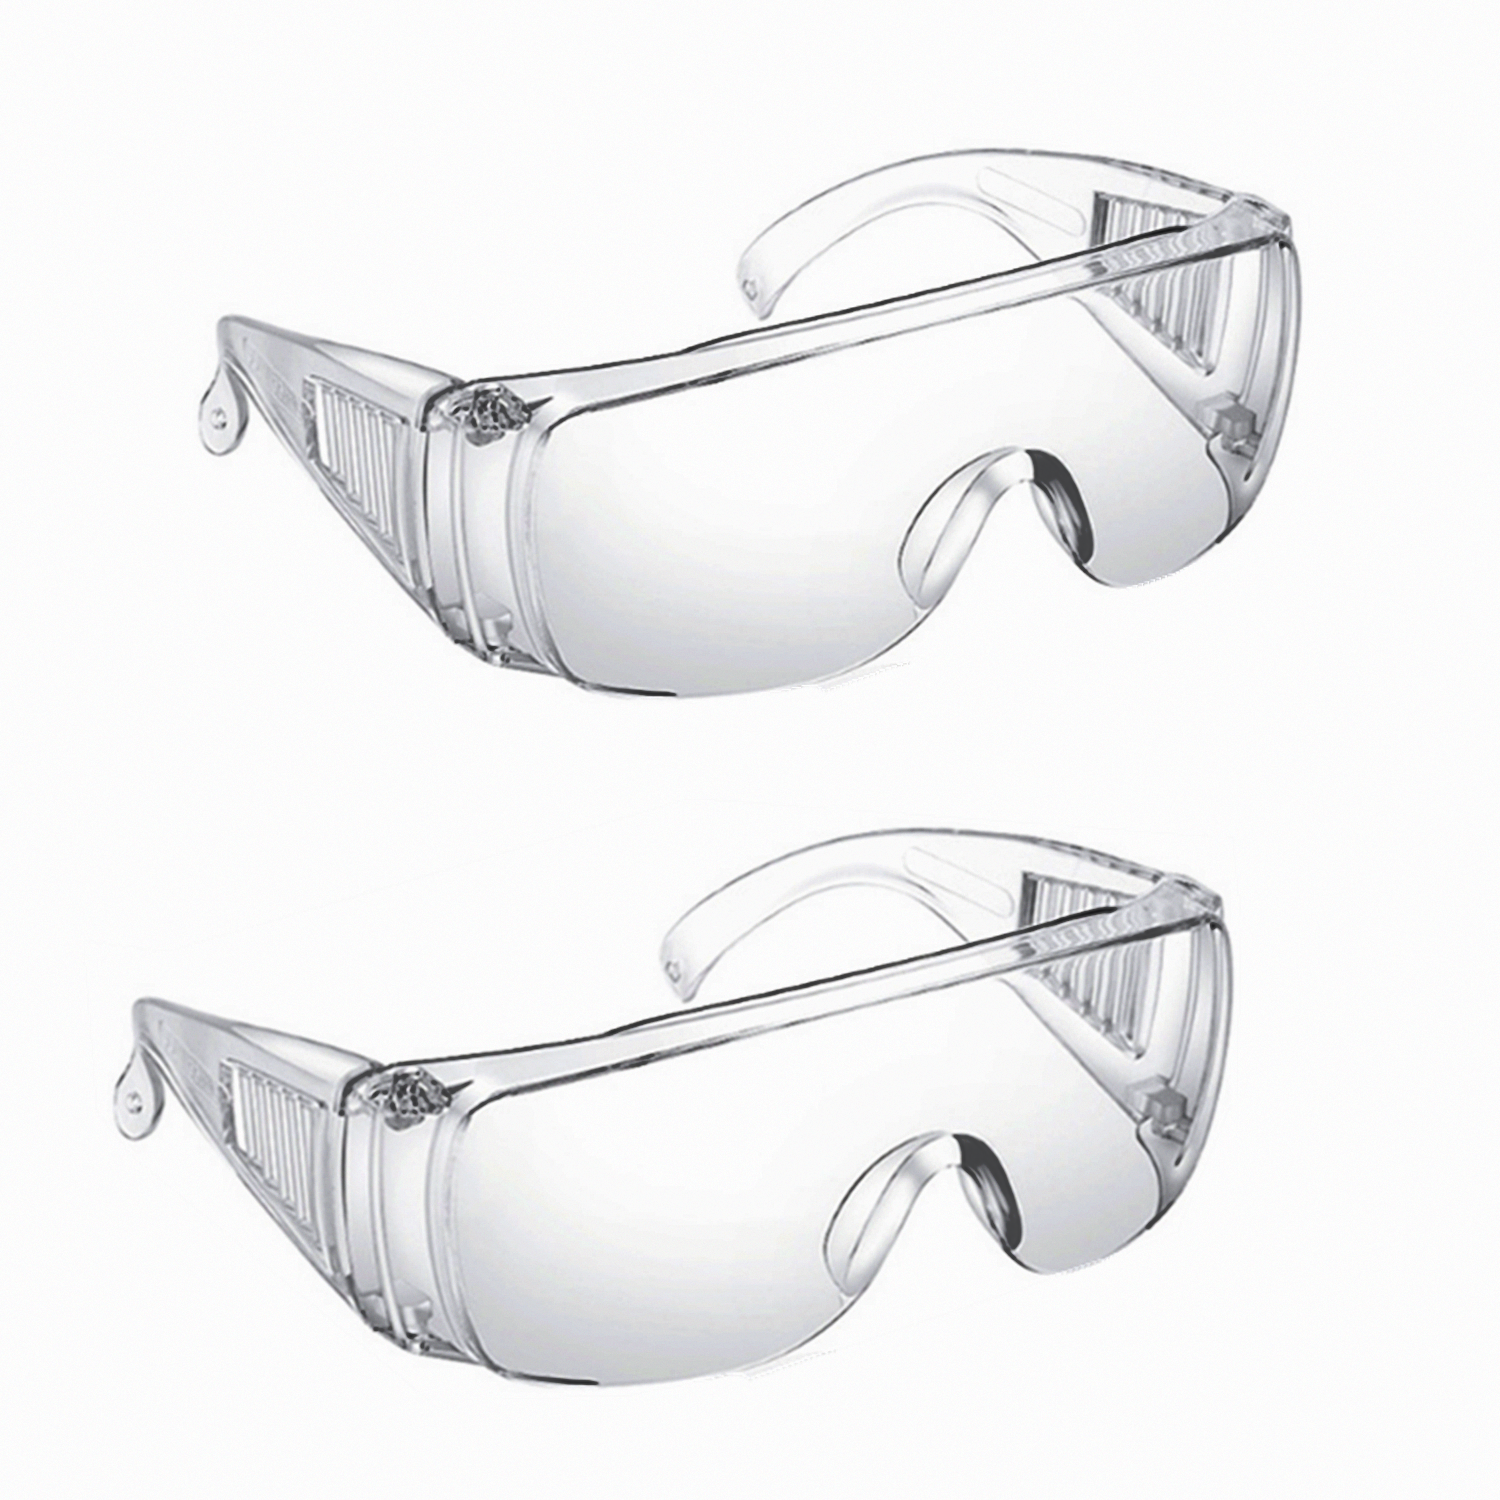 Transparent Safety Goggles Glasses  Dust-Proof Splash Eye Protective Eyewear New 